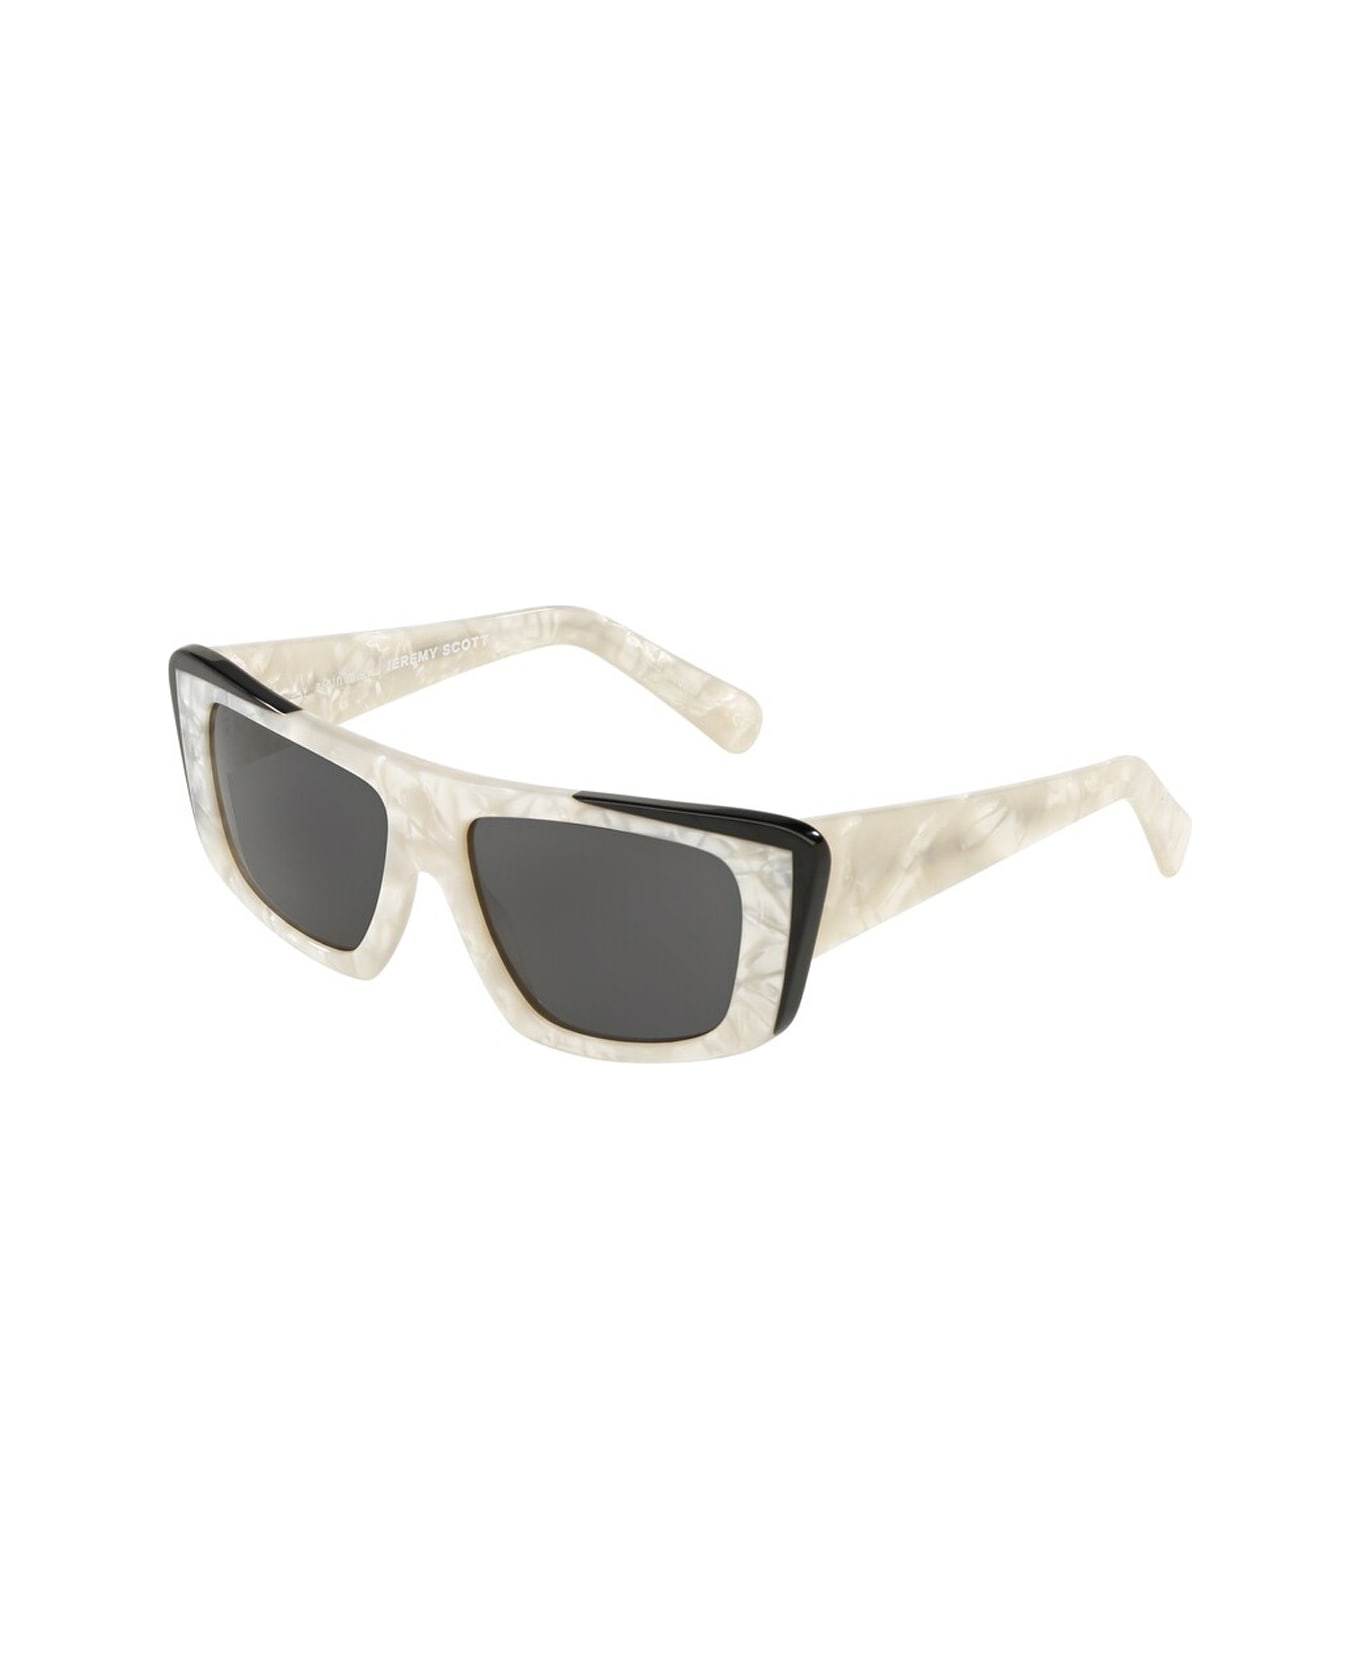 Alain Mikli A05029 Special Edition Sunglasses - Avorio